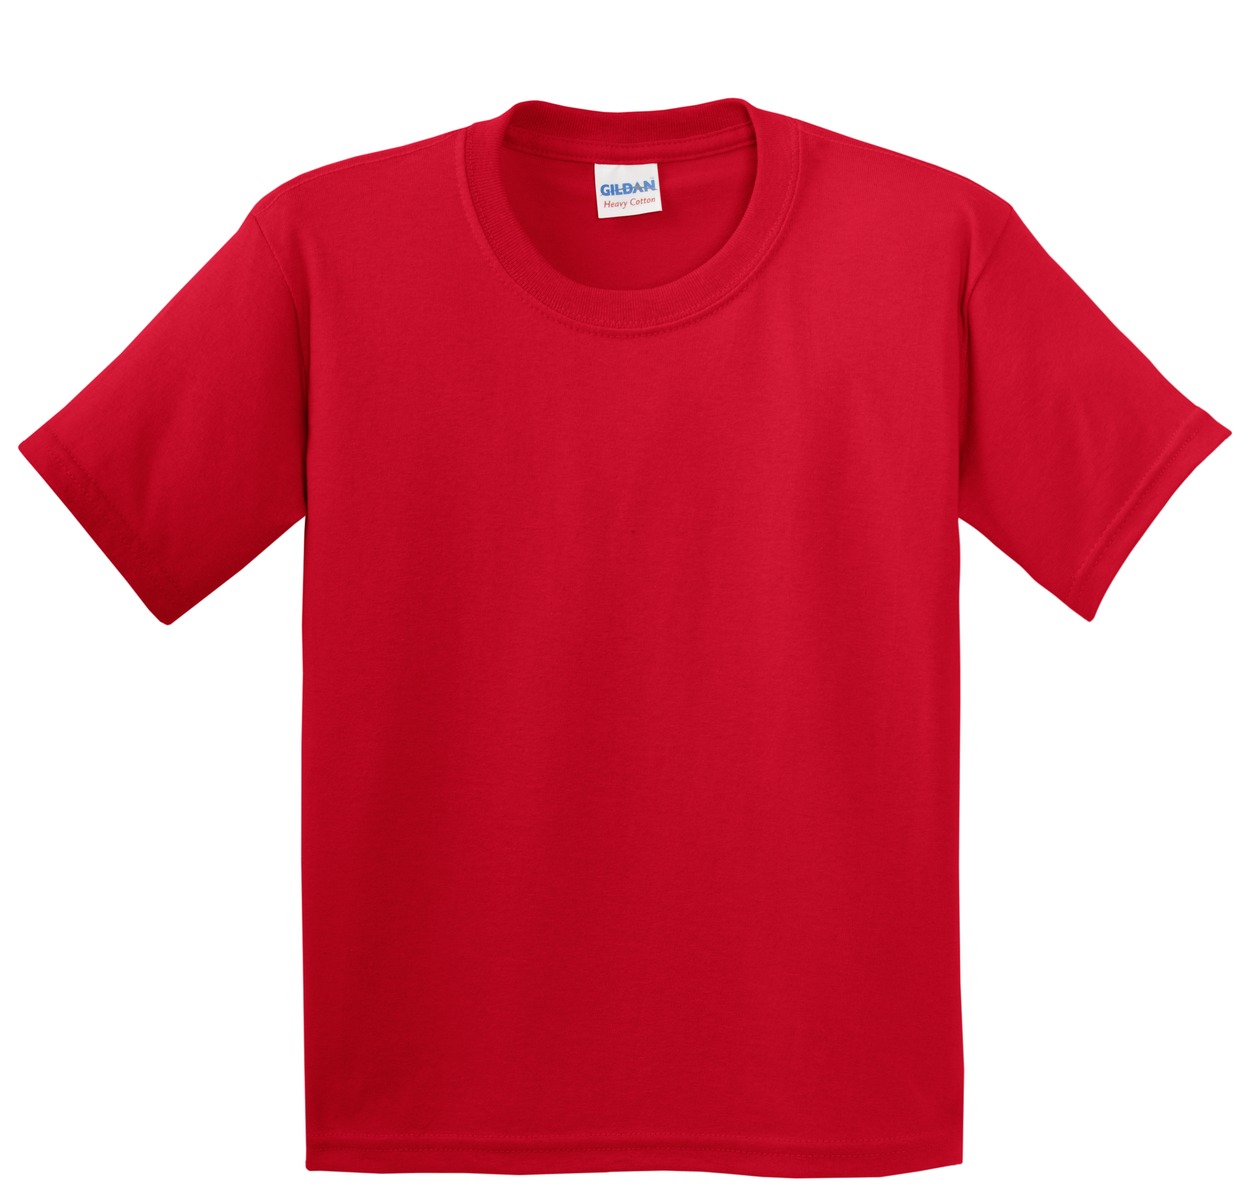 Artix - Big Girls T-Shirts and Tank Tops, up to Big Girls Size 24 - San Francisco - image 4 of 5